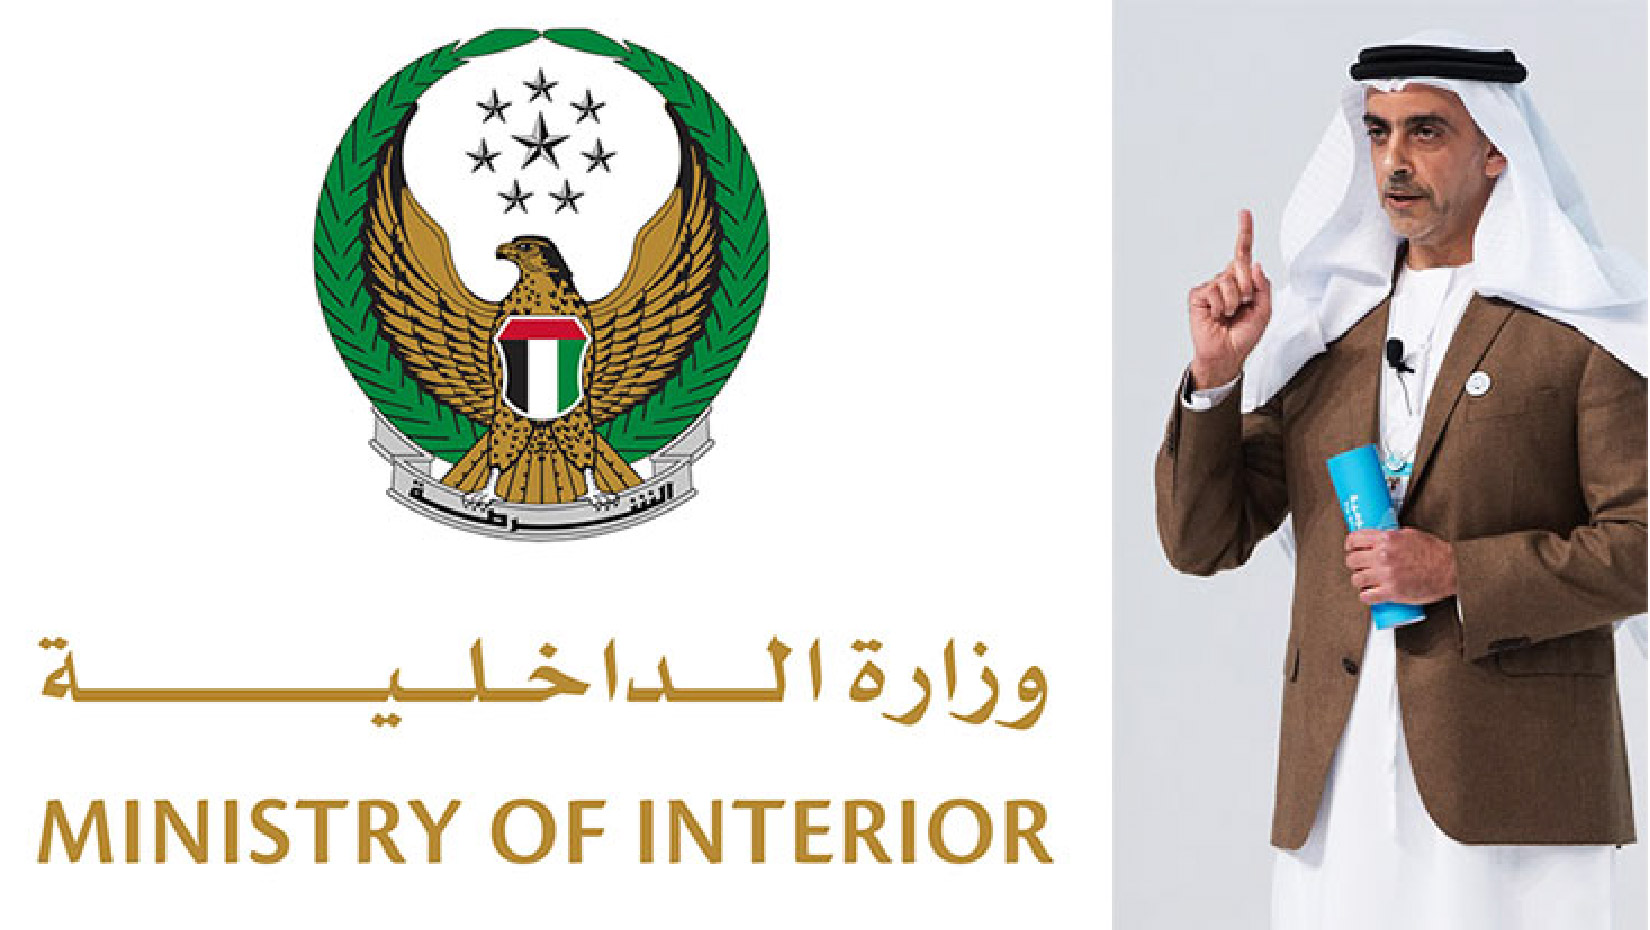 Saif bin Zayed Launches Global Inspiration Platform, “Zayed, the Inspirer”